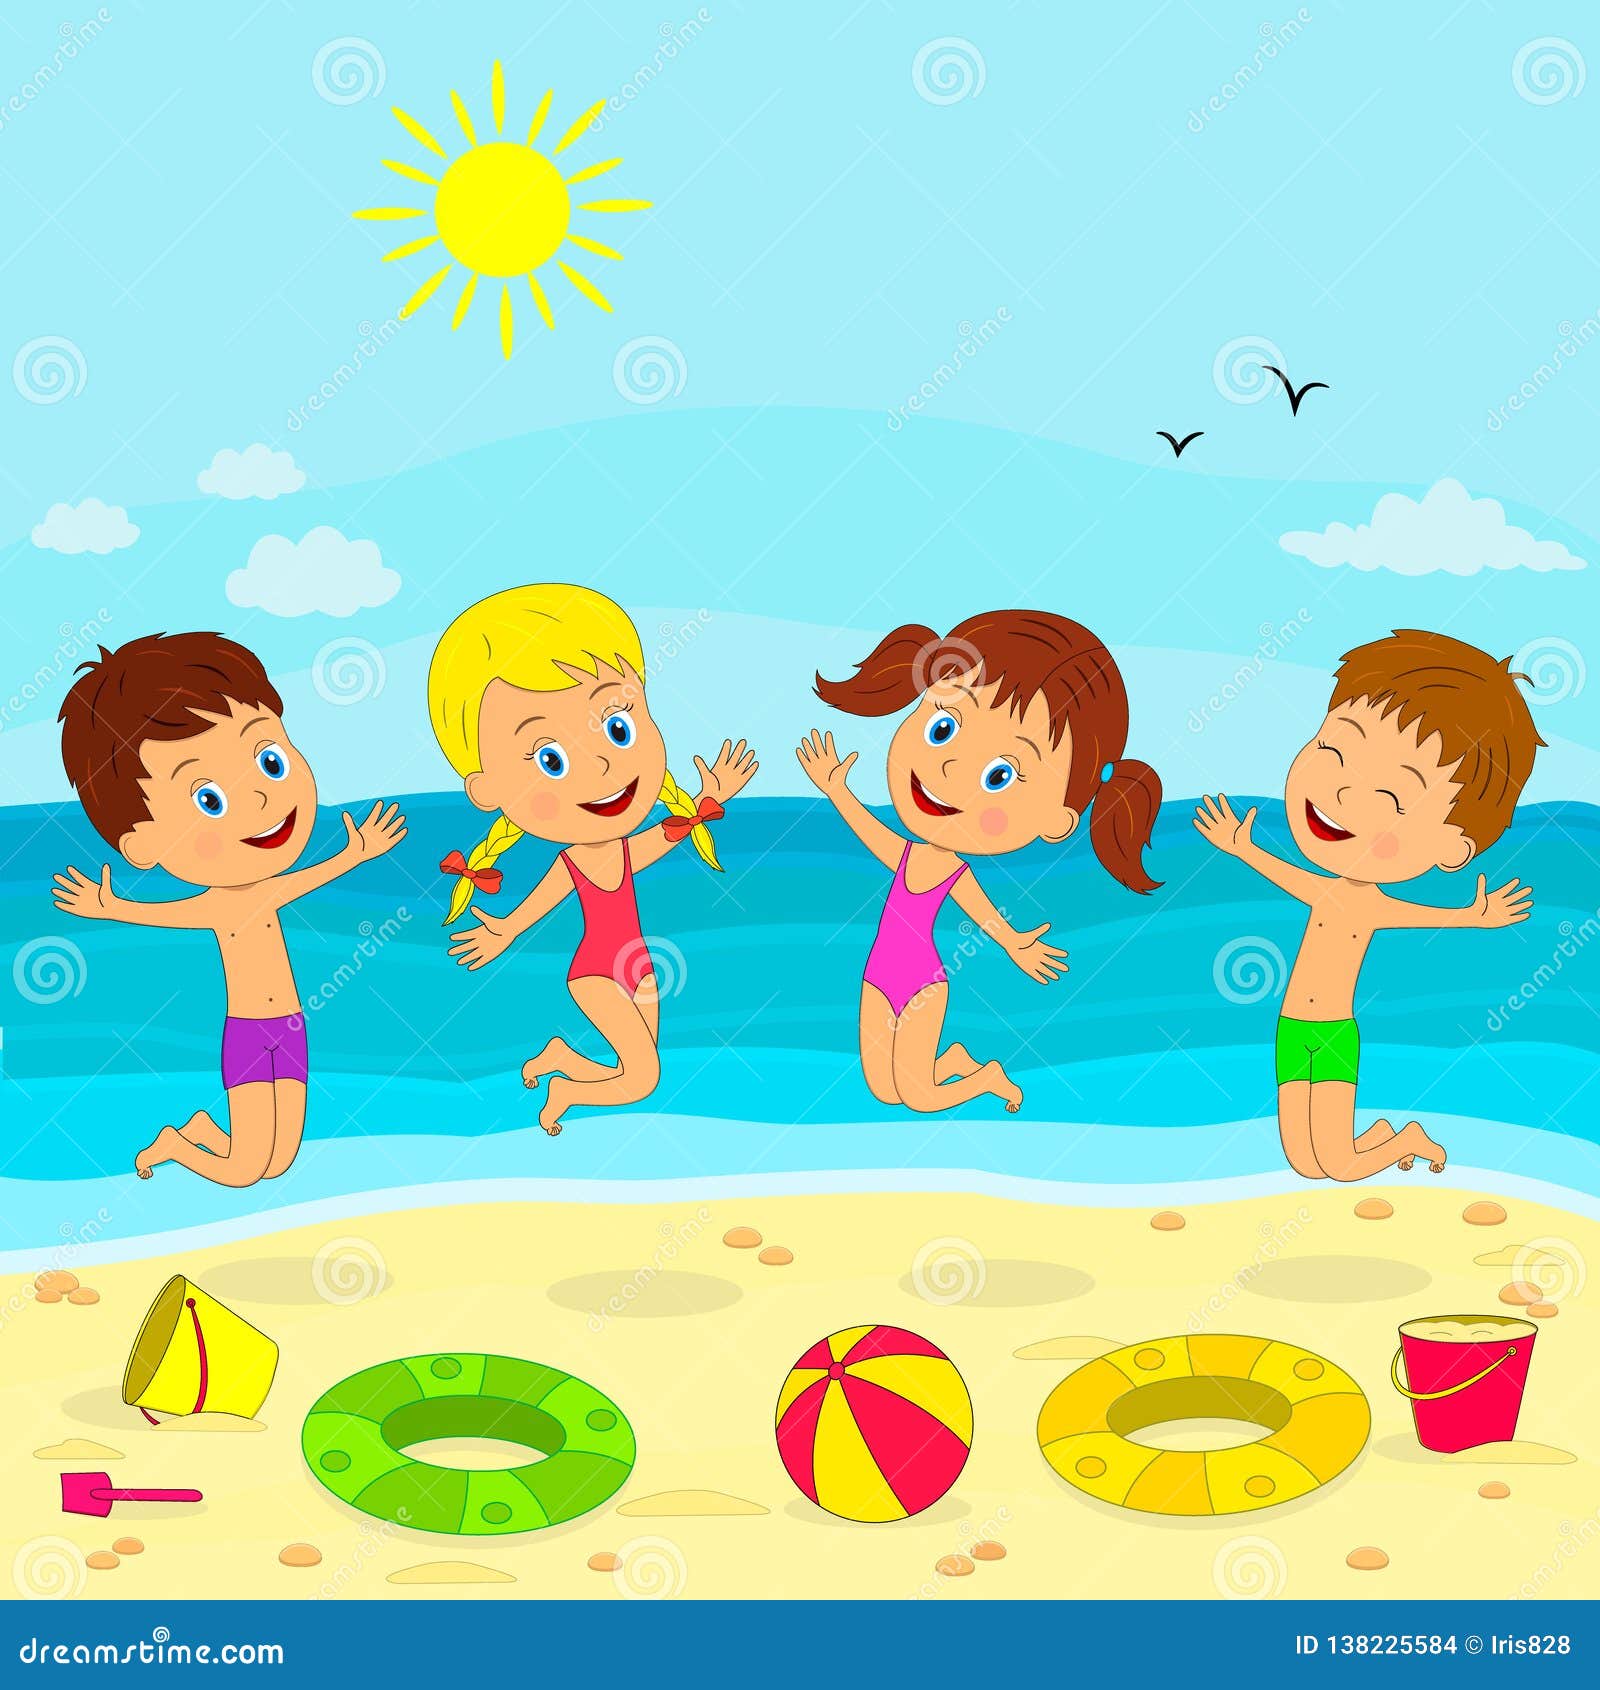 Boy and Girl Play and Jump on the Summer Beach Stock Vector ...